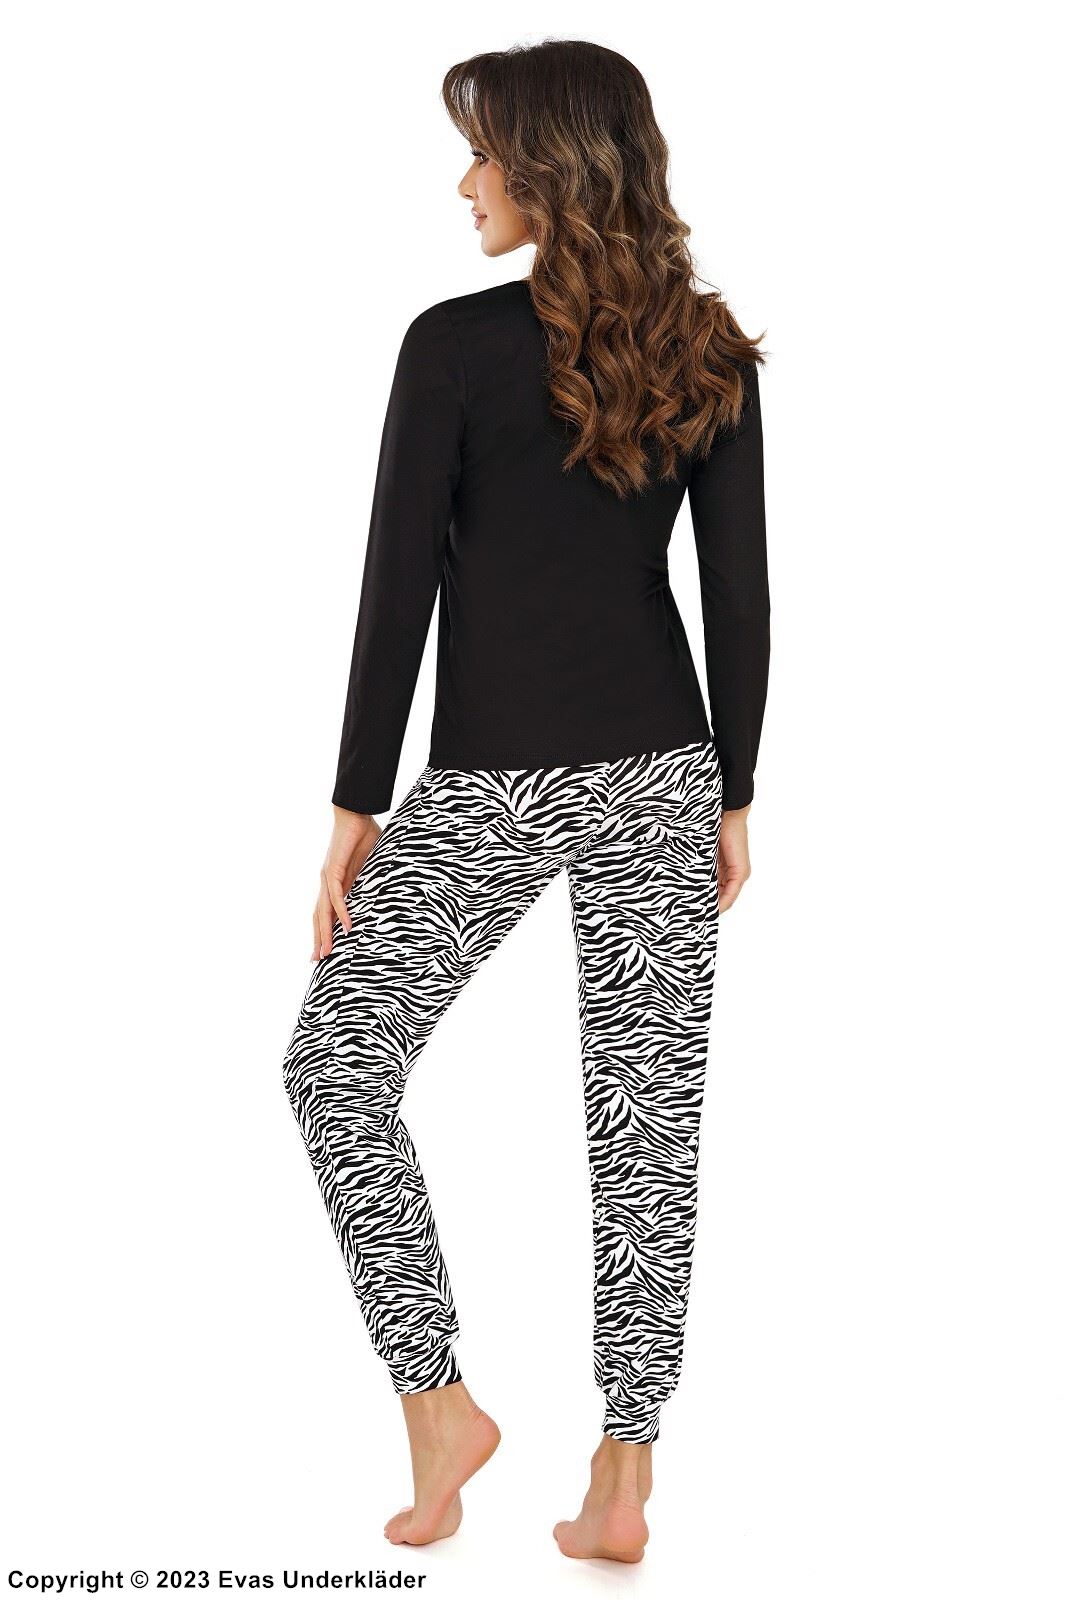 Top and pants pajamas, long sleeves, lace inlay, zebra